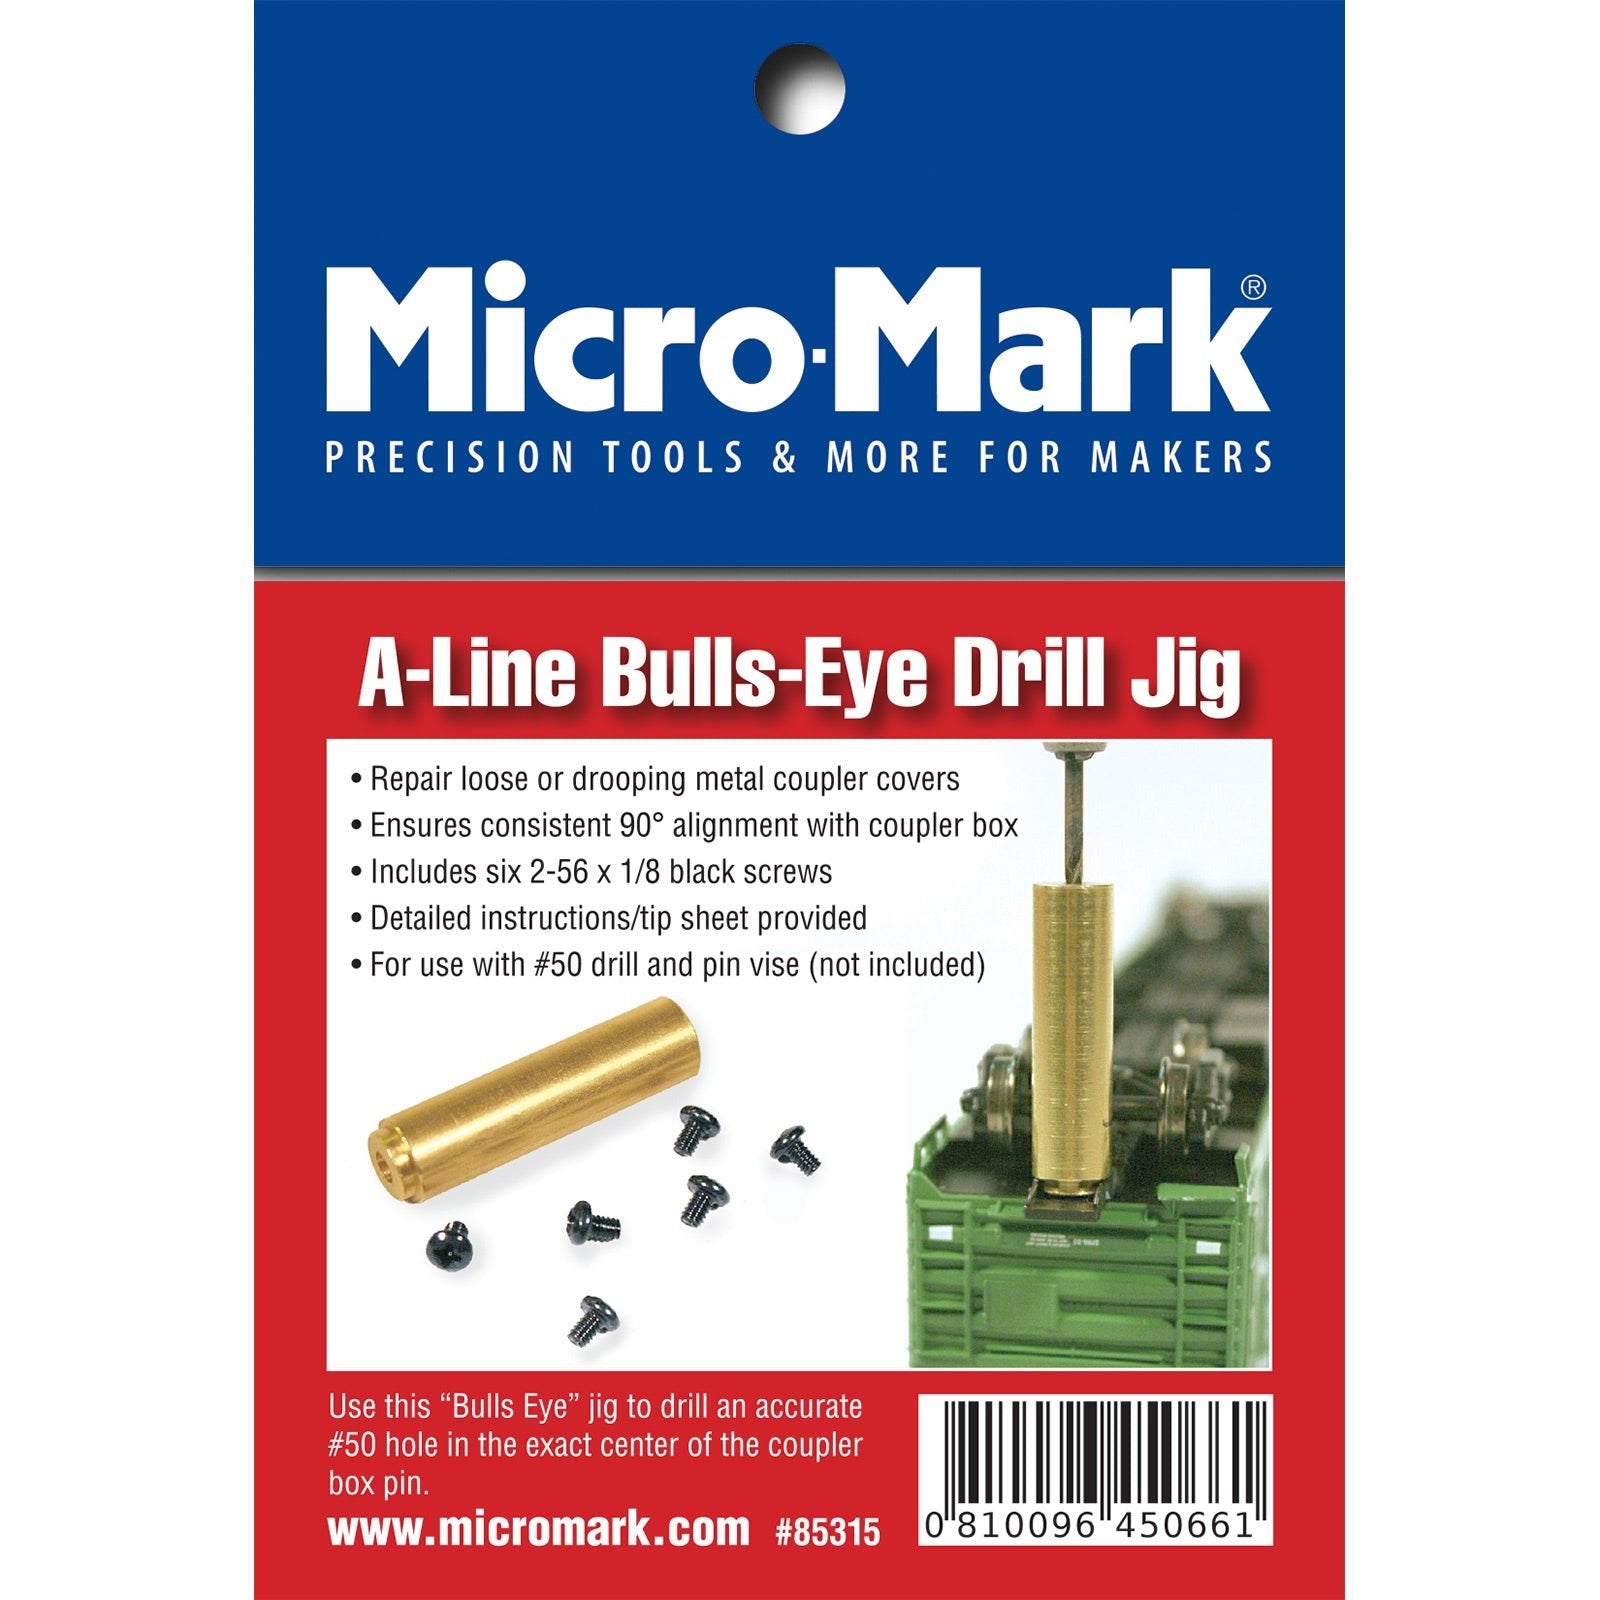 A-Line Bulls Eye Drill Jig and Screws